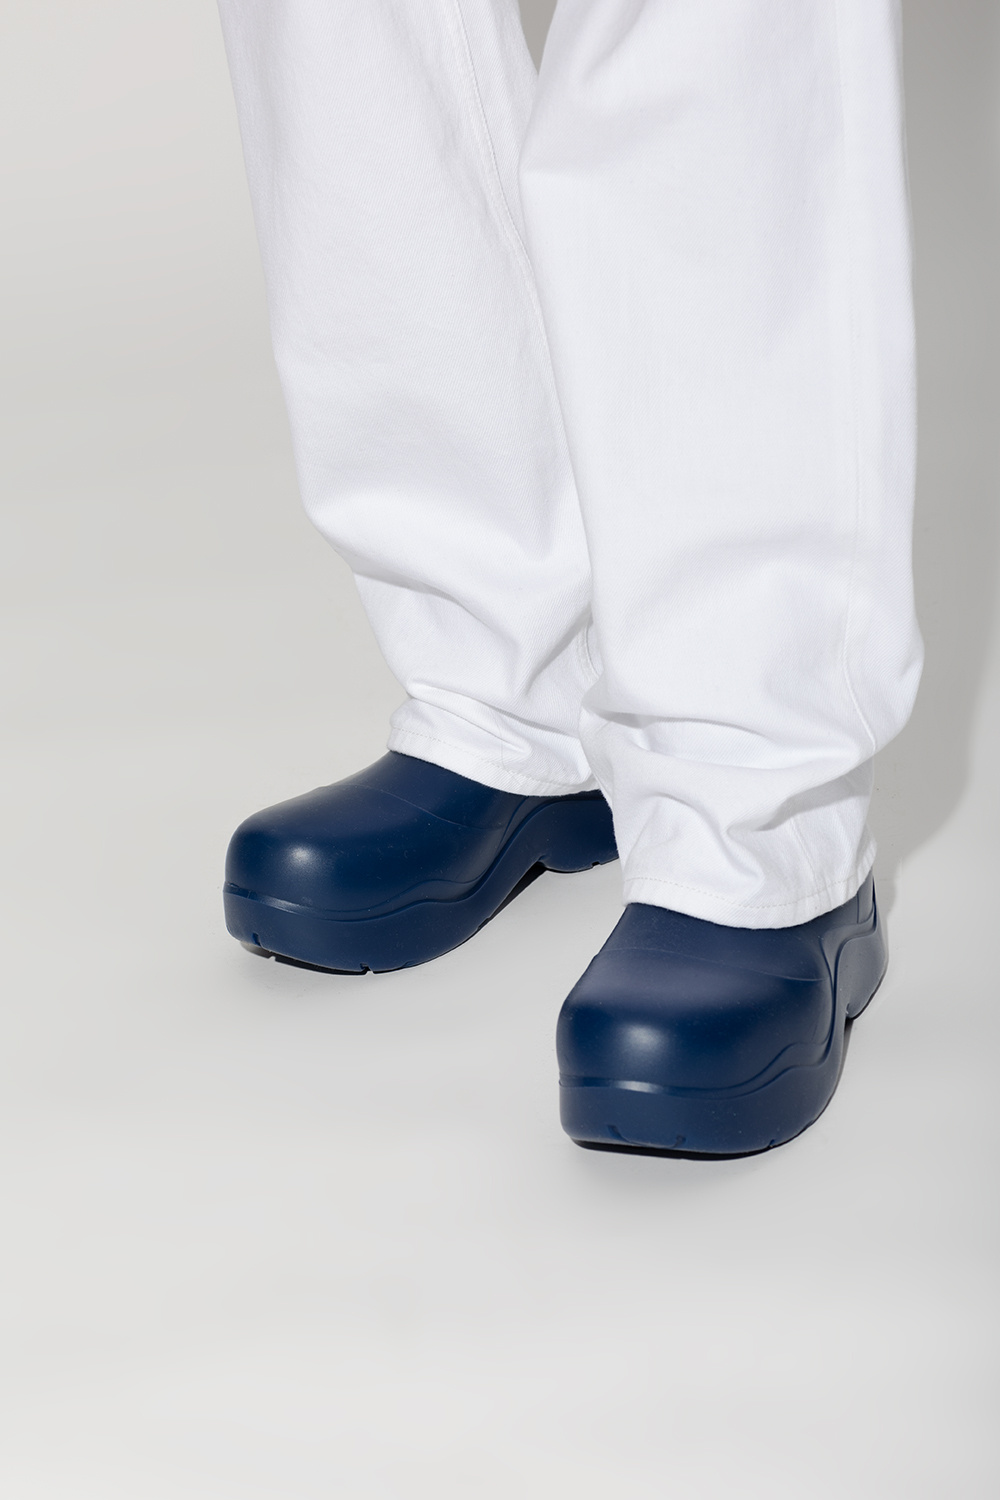 Navy blue 'Puddle' rain boots Bottega Veneta - Vitkac Canada